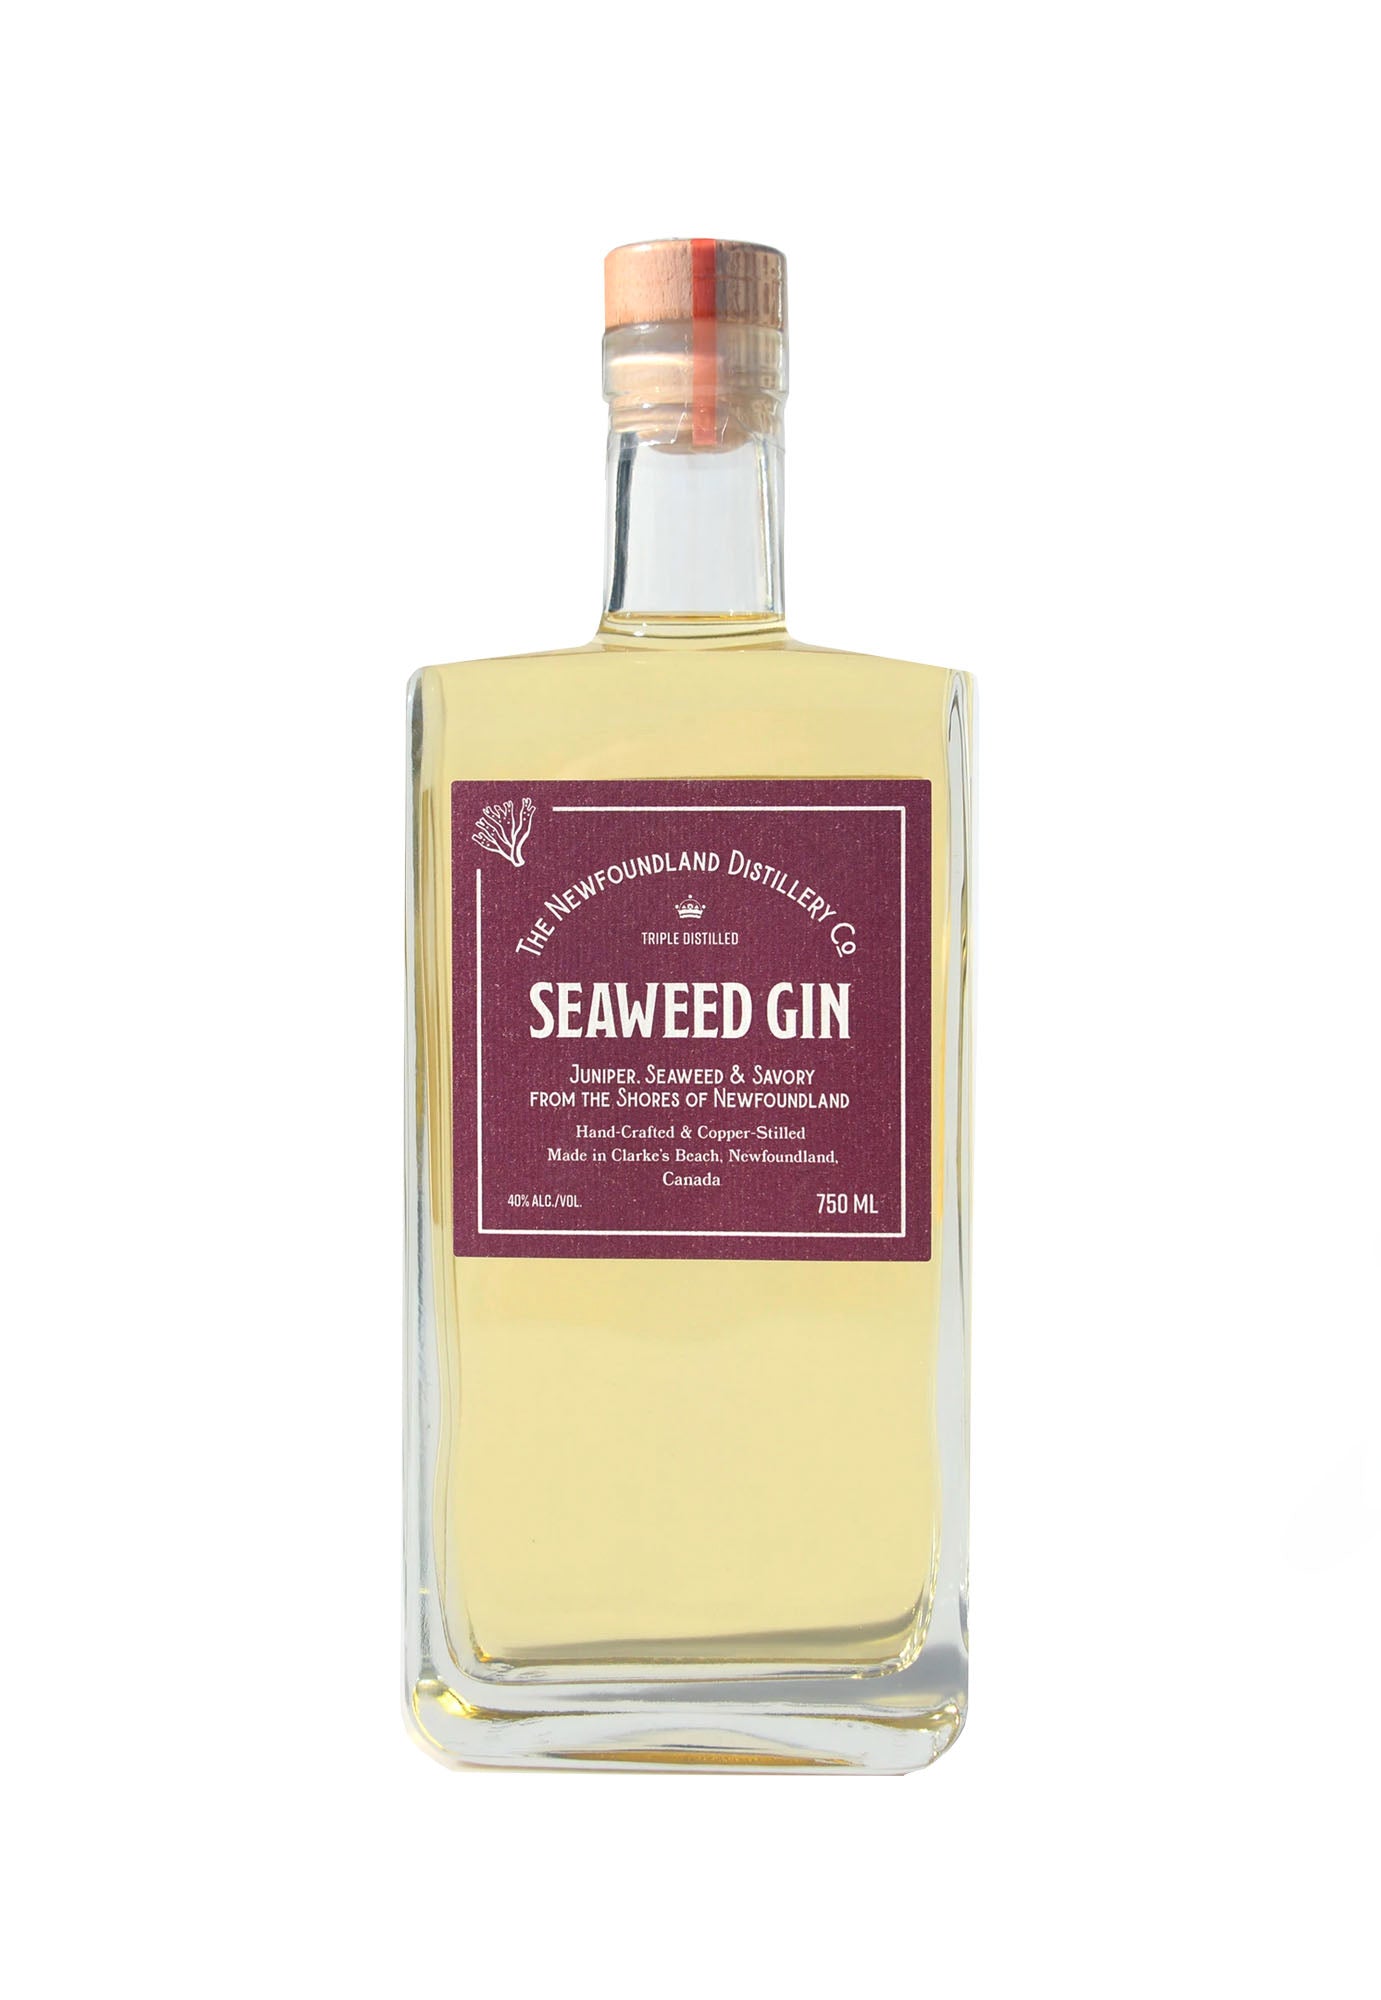 The Newfoundland Distillery Seaweed Gin